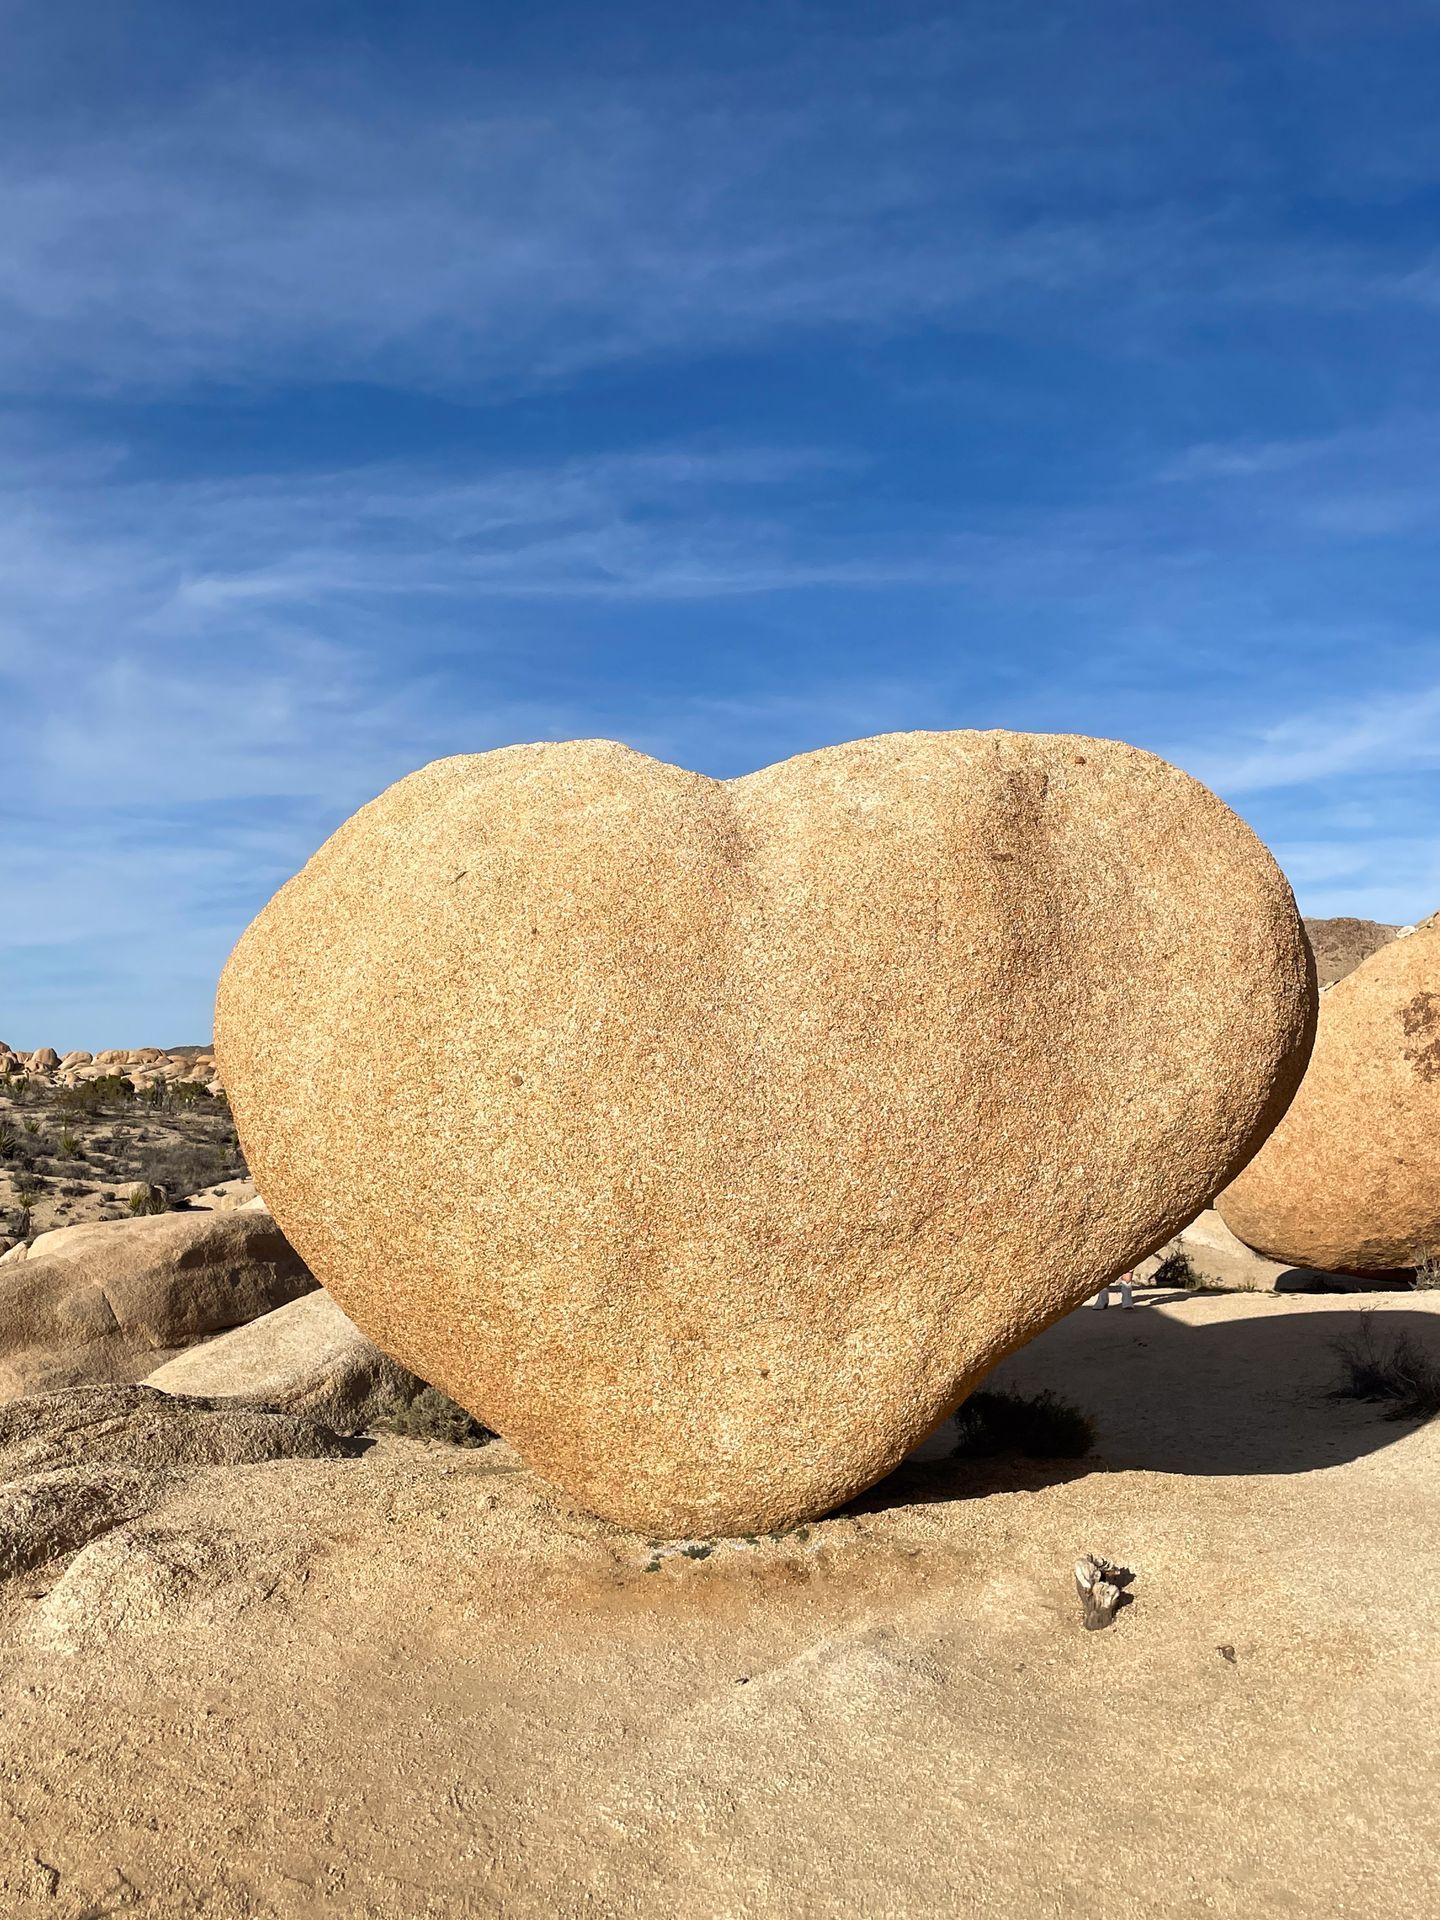 A tall boulder that seems to resemble a heart shape.